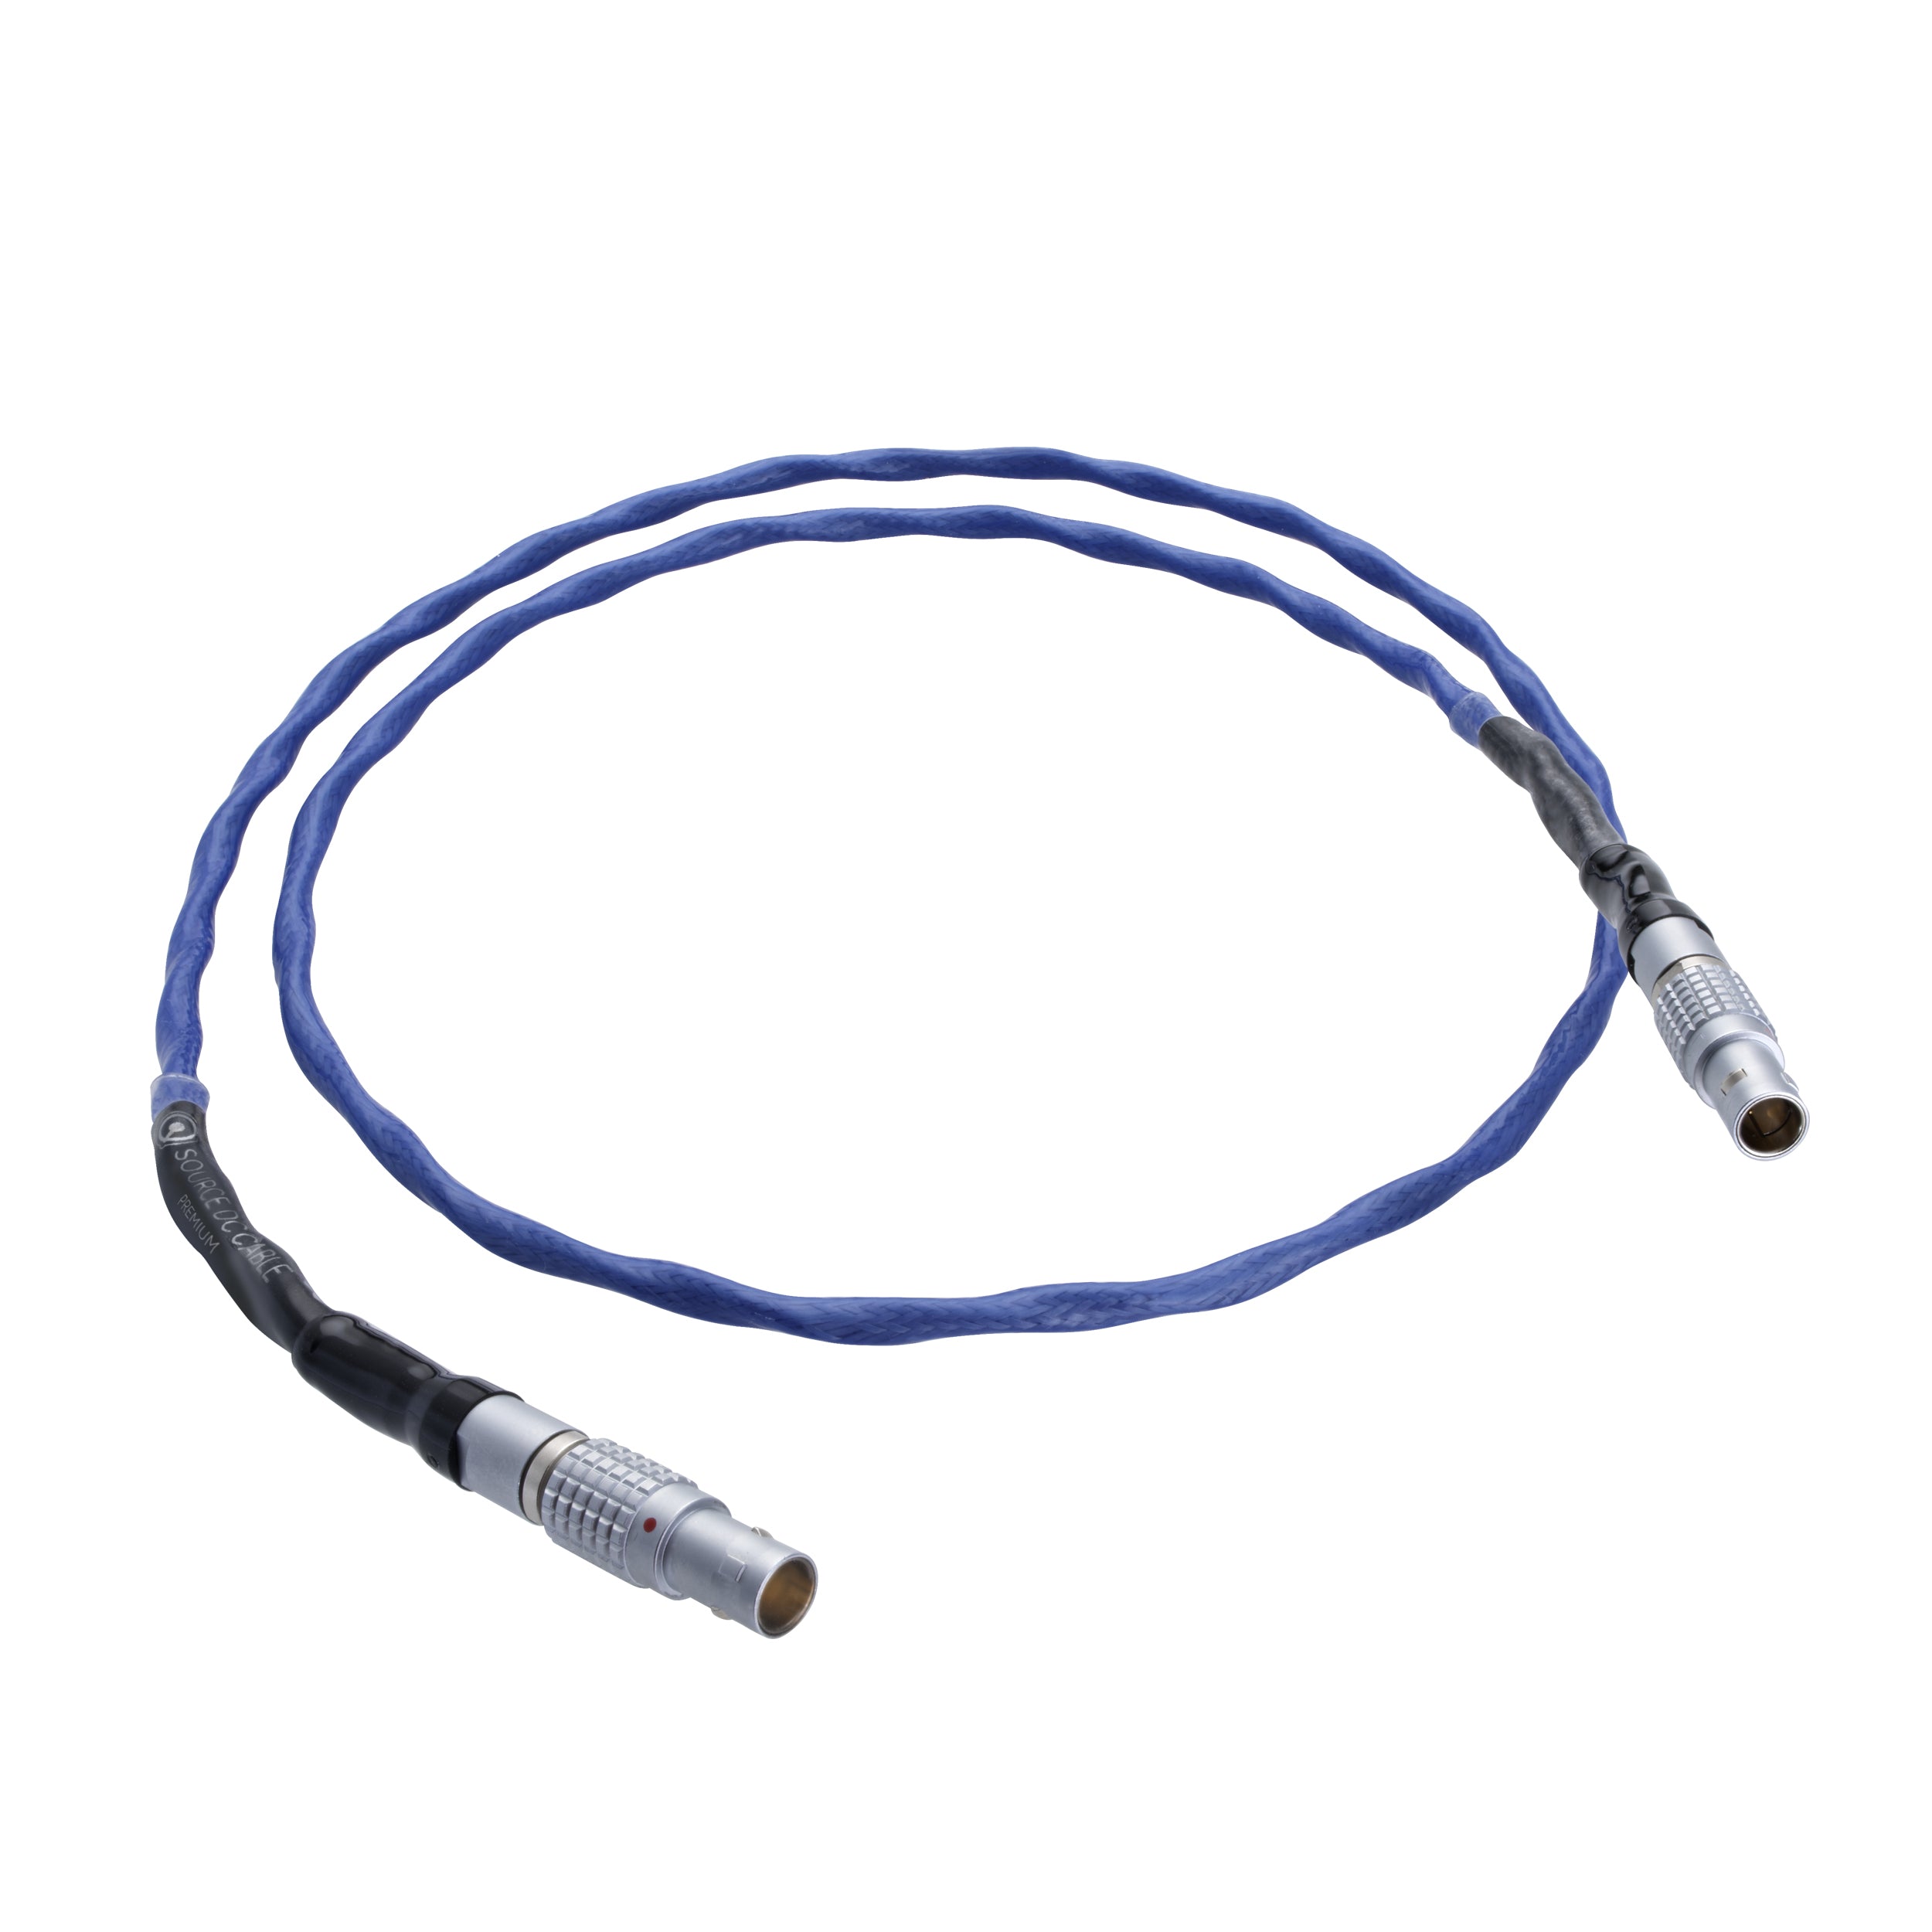 Nordost QSOURCE DC Cable - Premium